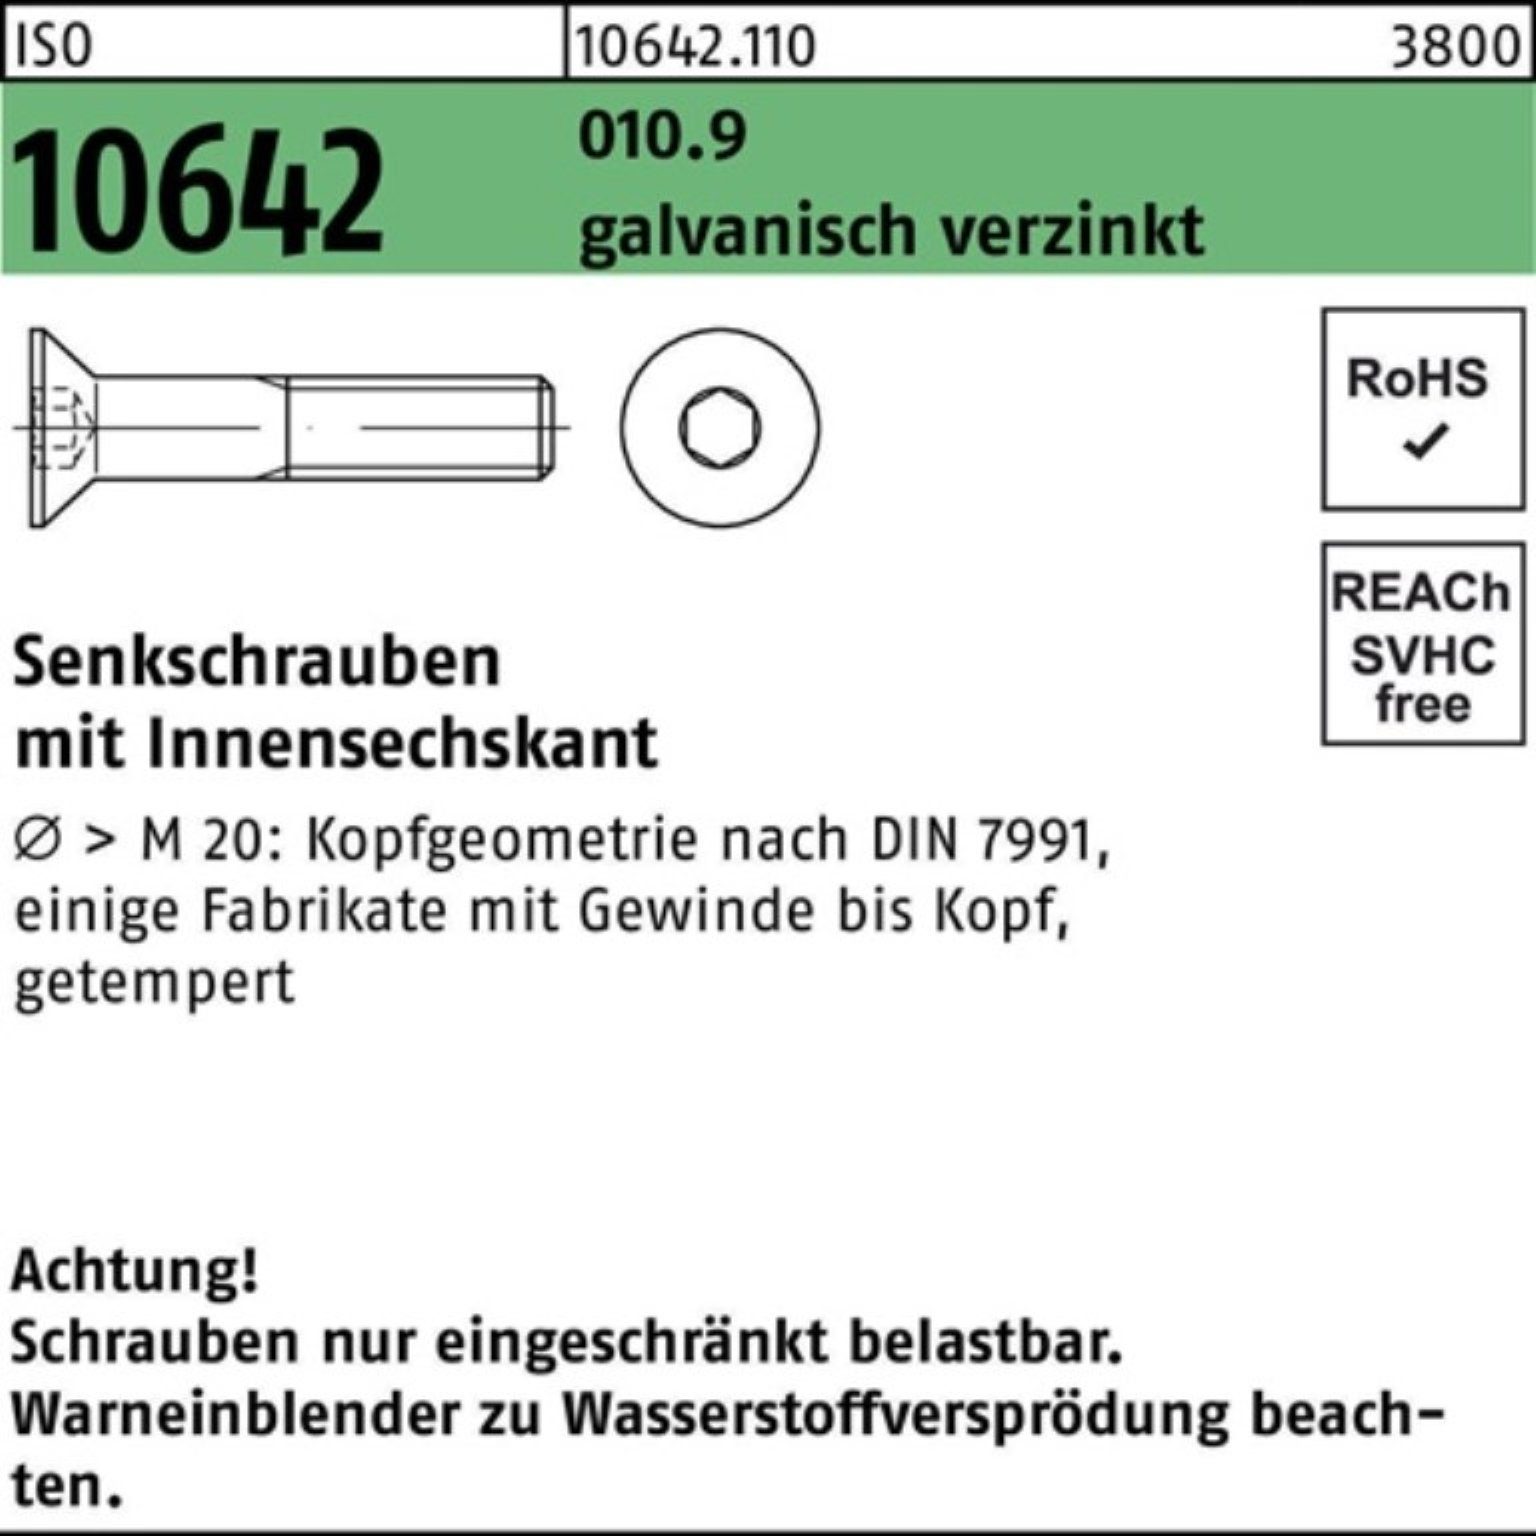 Reyher Senkschraube 500er Pack Senkschraube ISO 10642 Innen-6kt M5x 16 010.9 galv.verz. 50